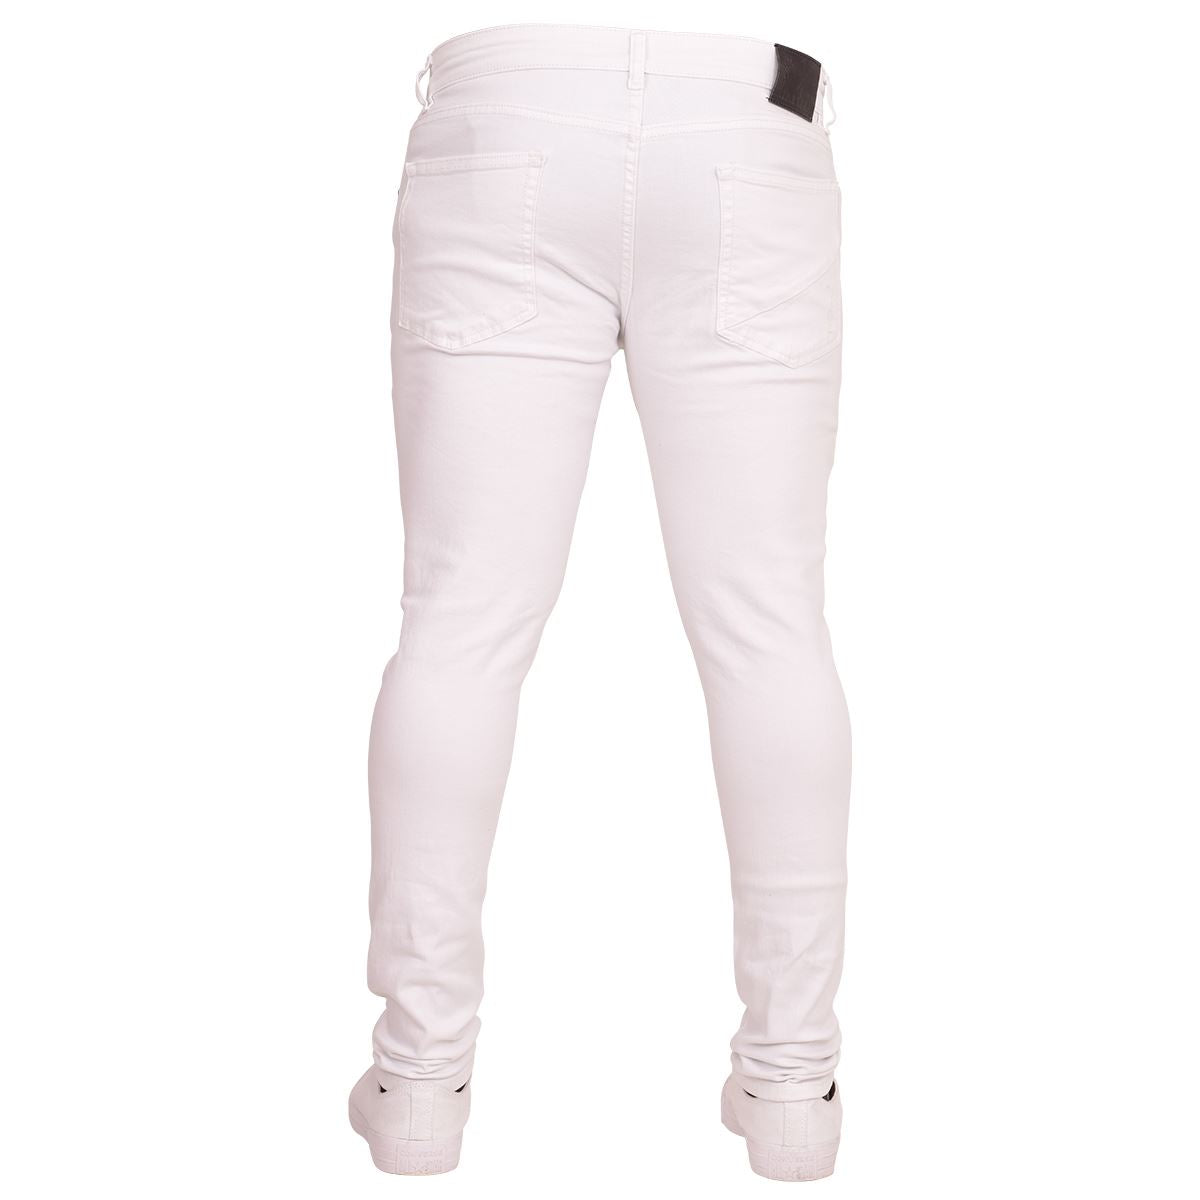 Mens White Super Skinny Fit Jeans Distressed Stretch Denim Designer Casual